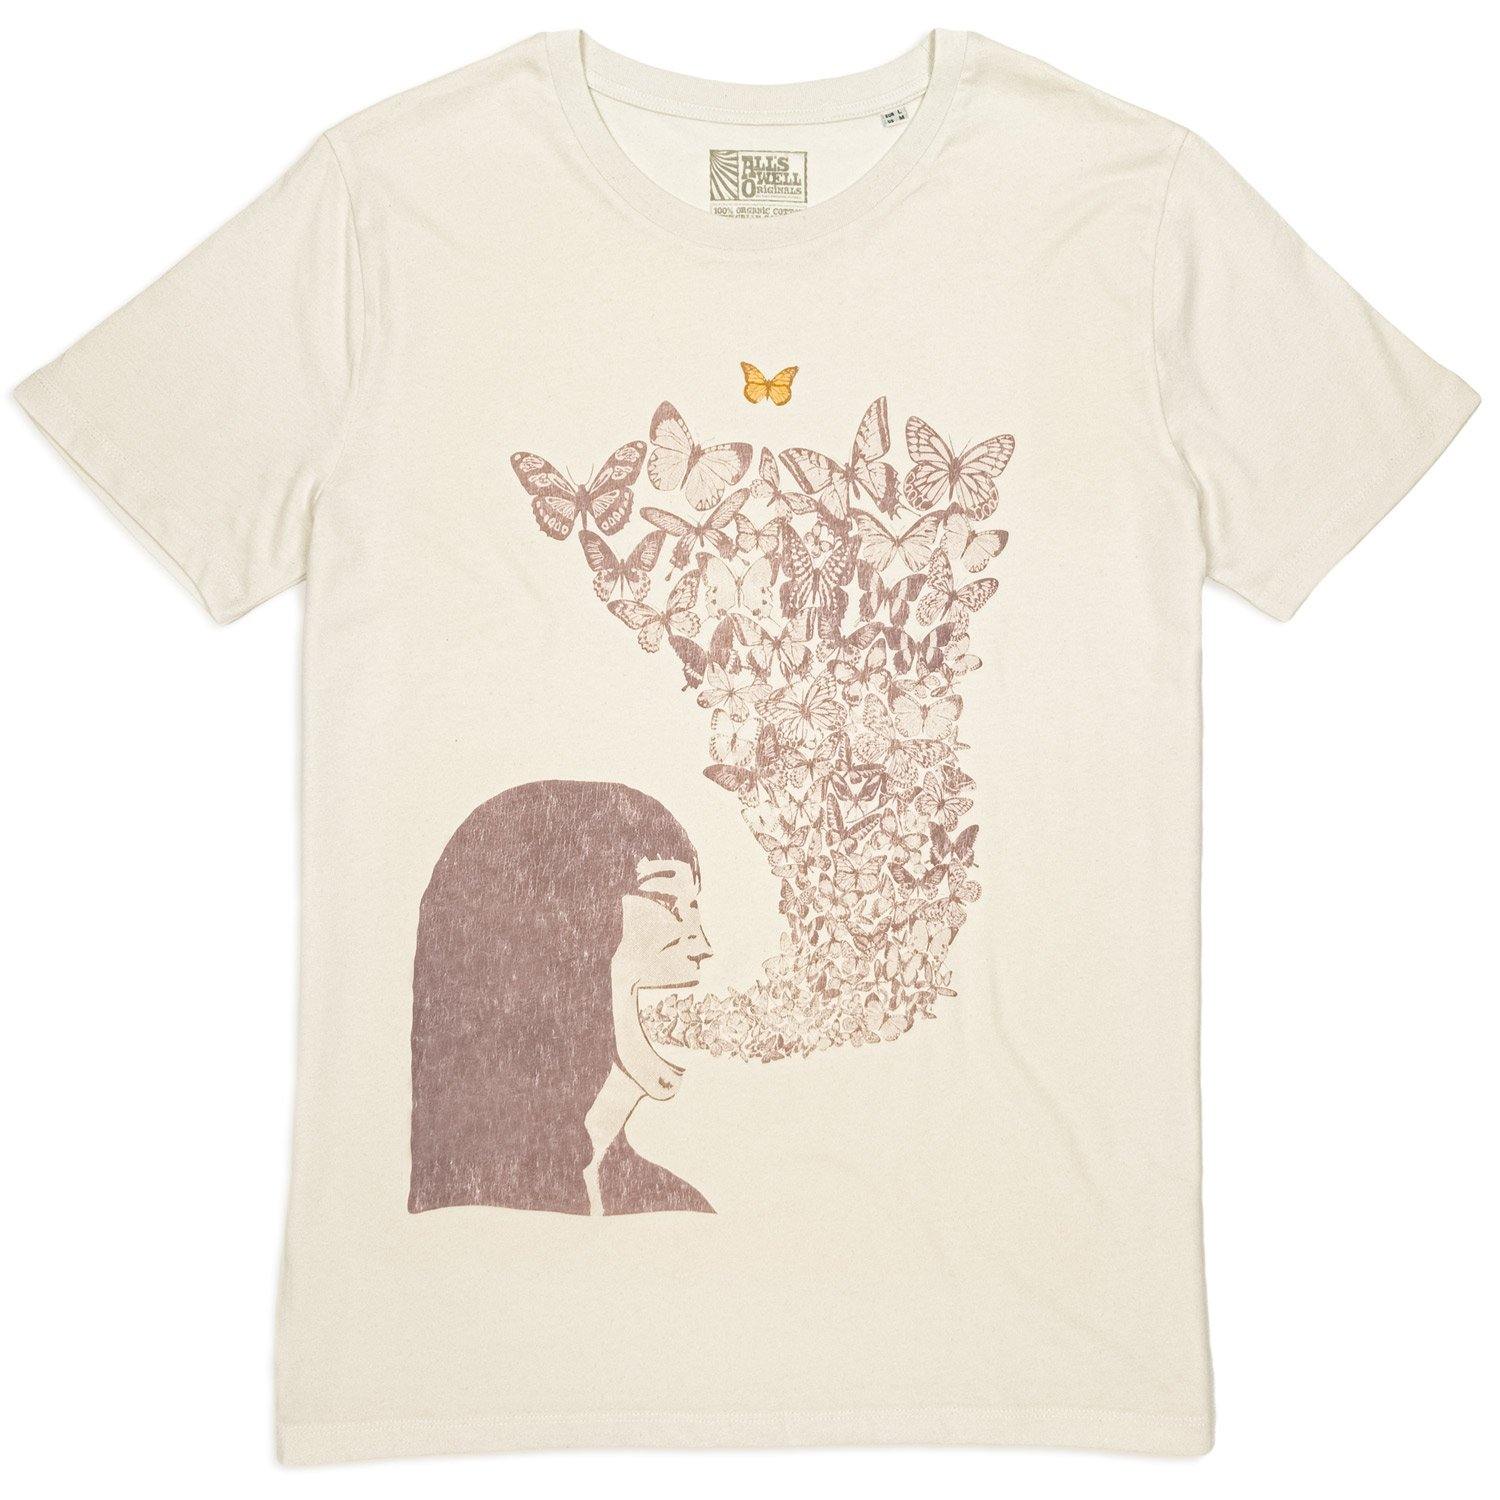 Butterfly t-shirt hand printed 100% organic cotton t-shirt